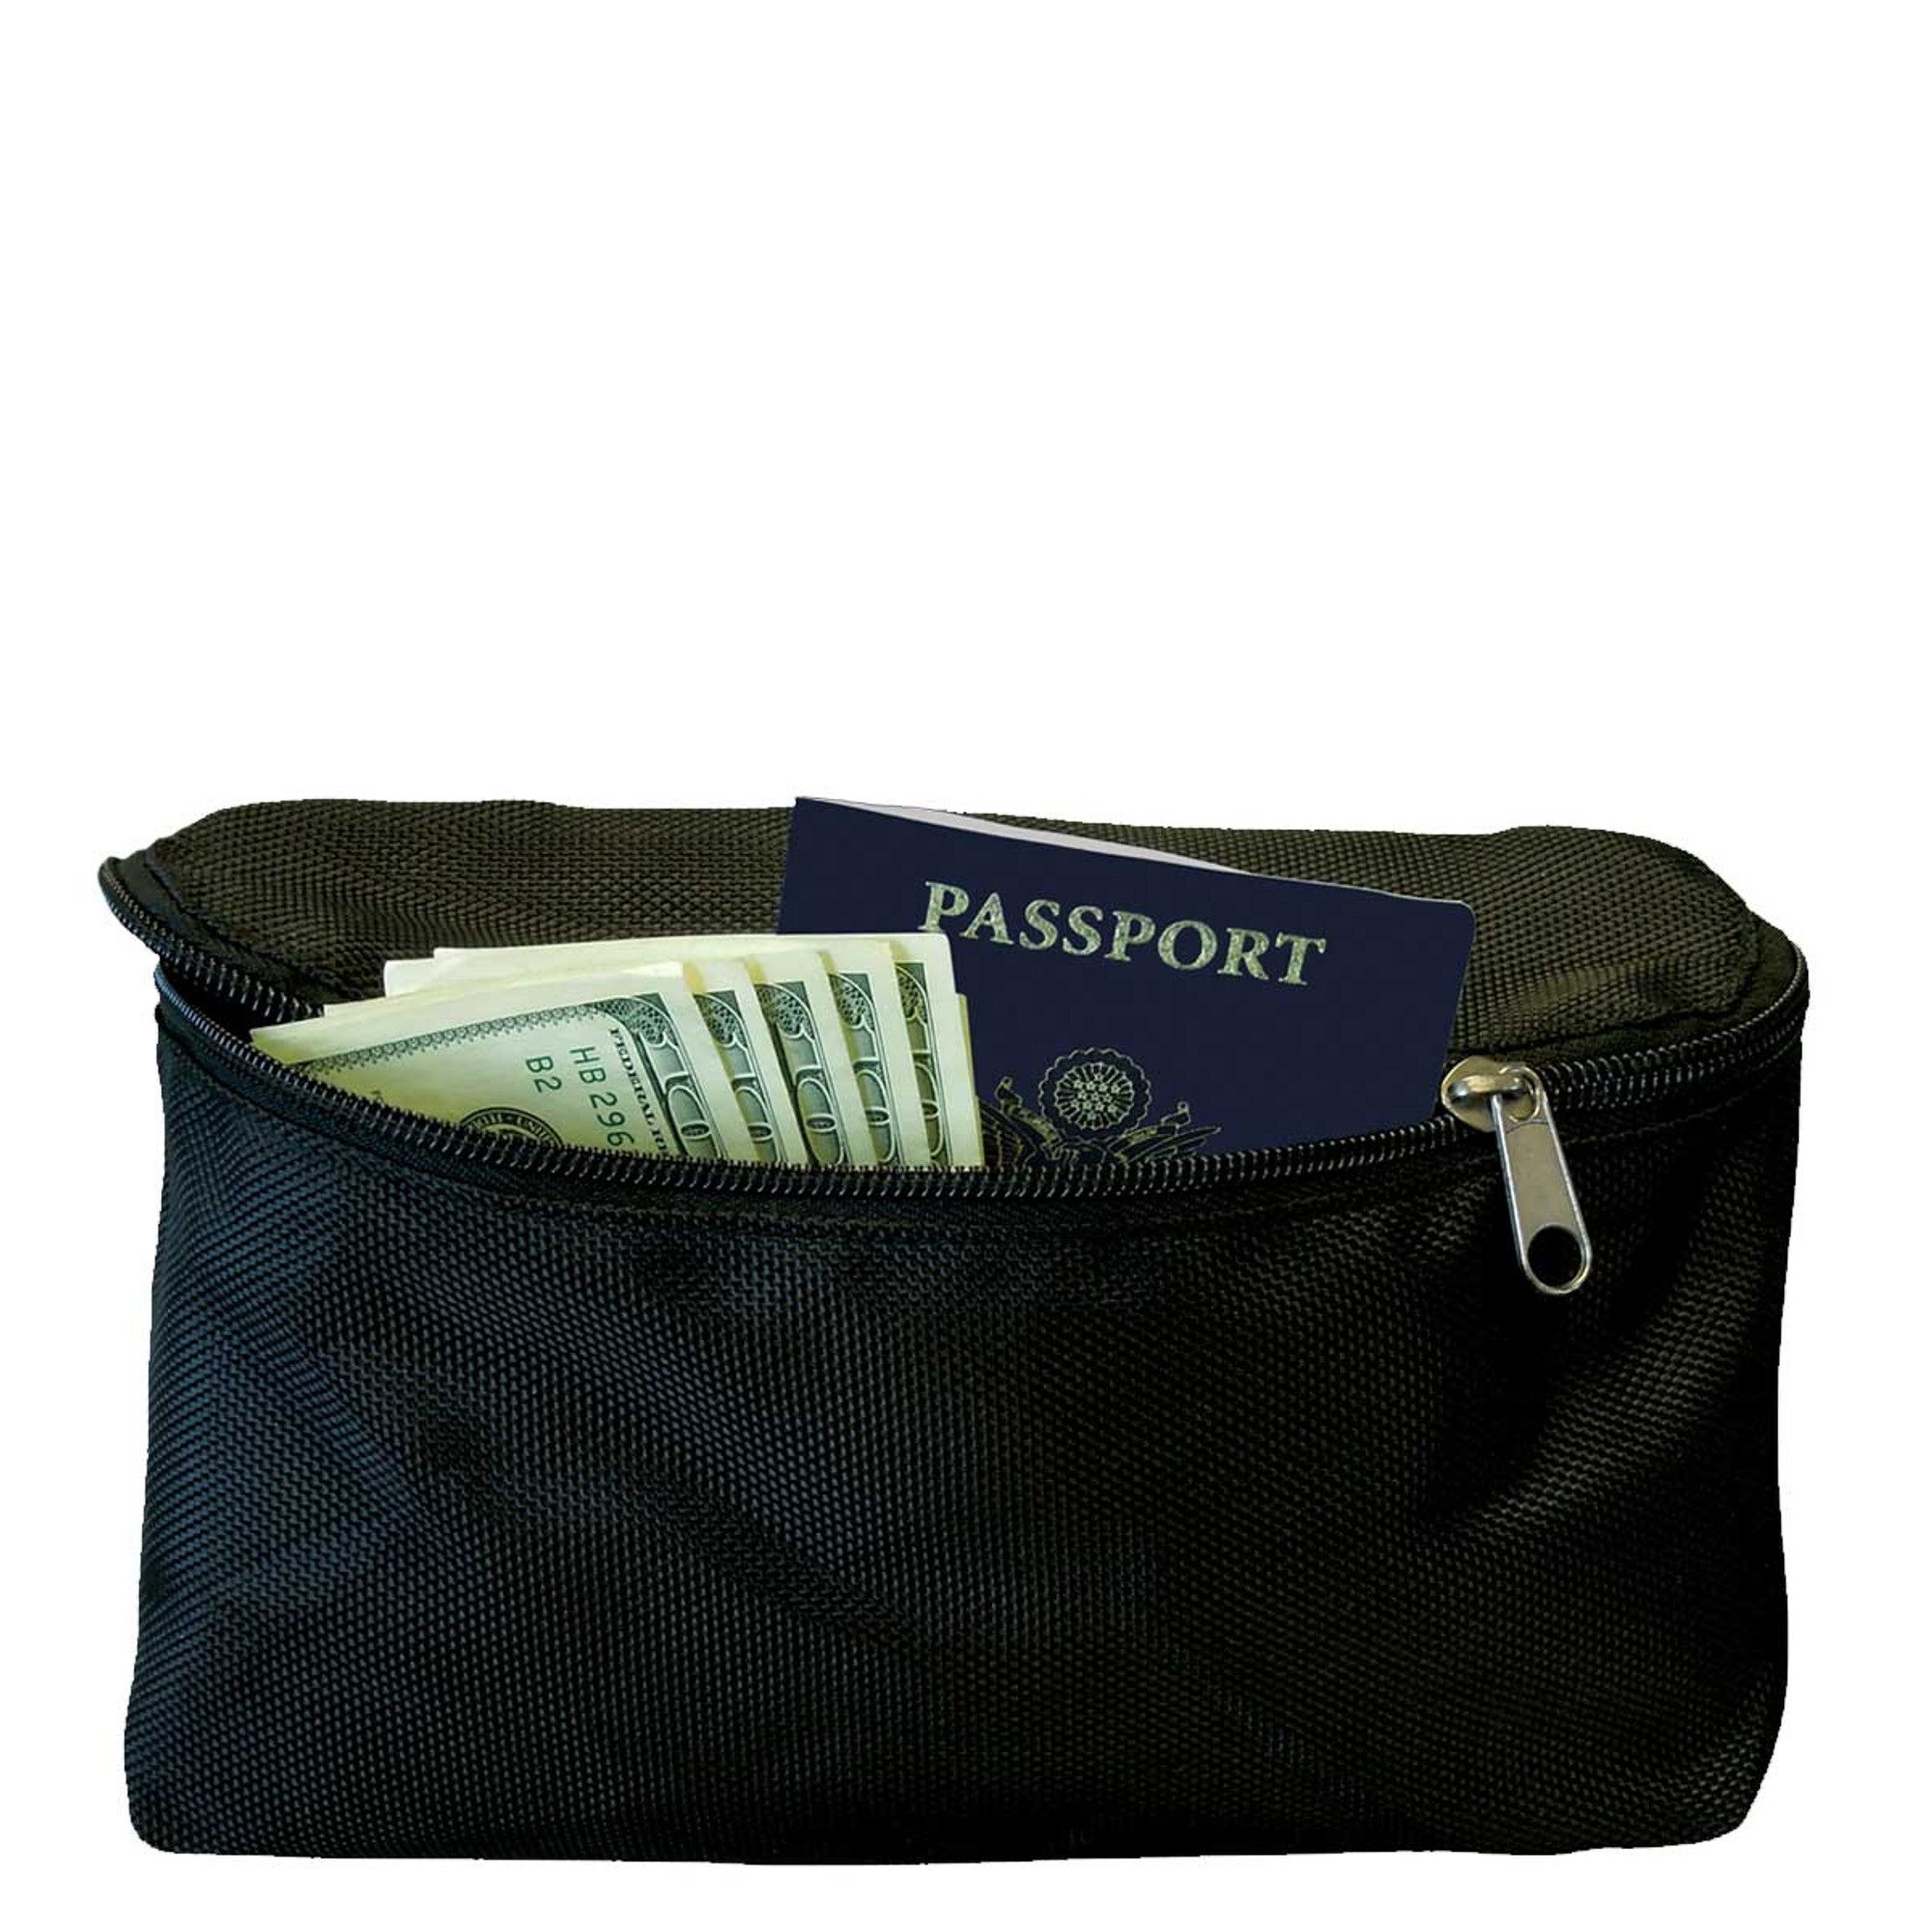 Burk Bags: AKS Velcro Pouch – Panastore: Woodland Hills